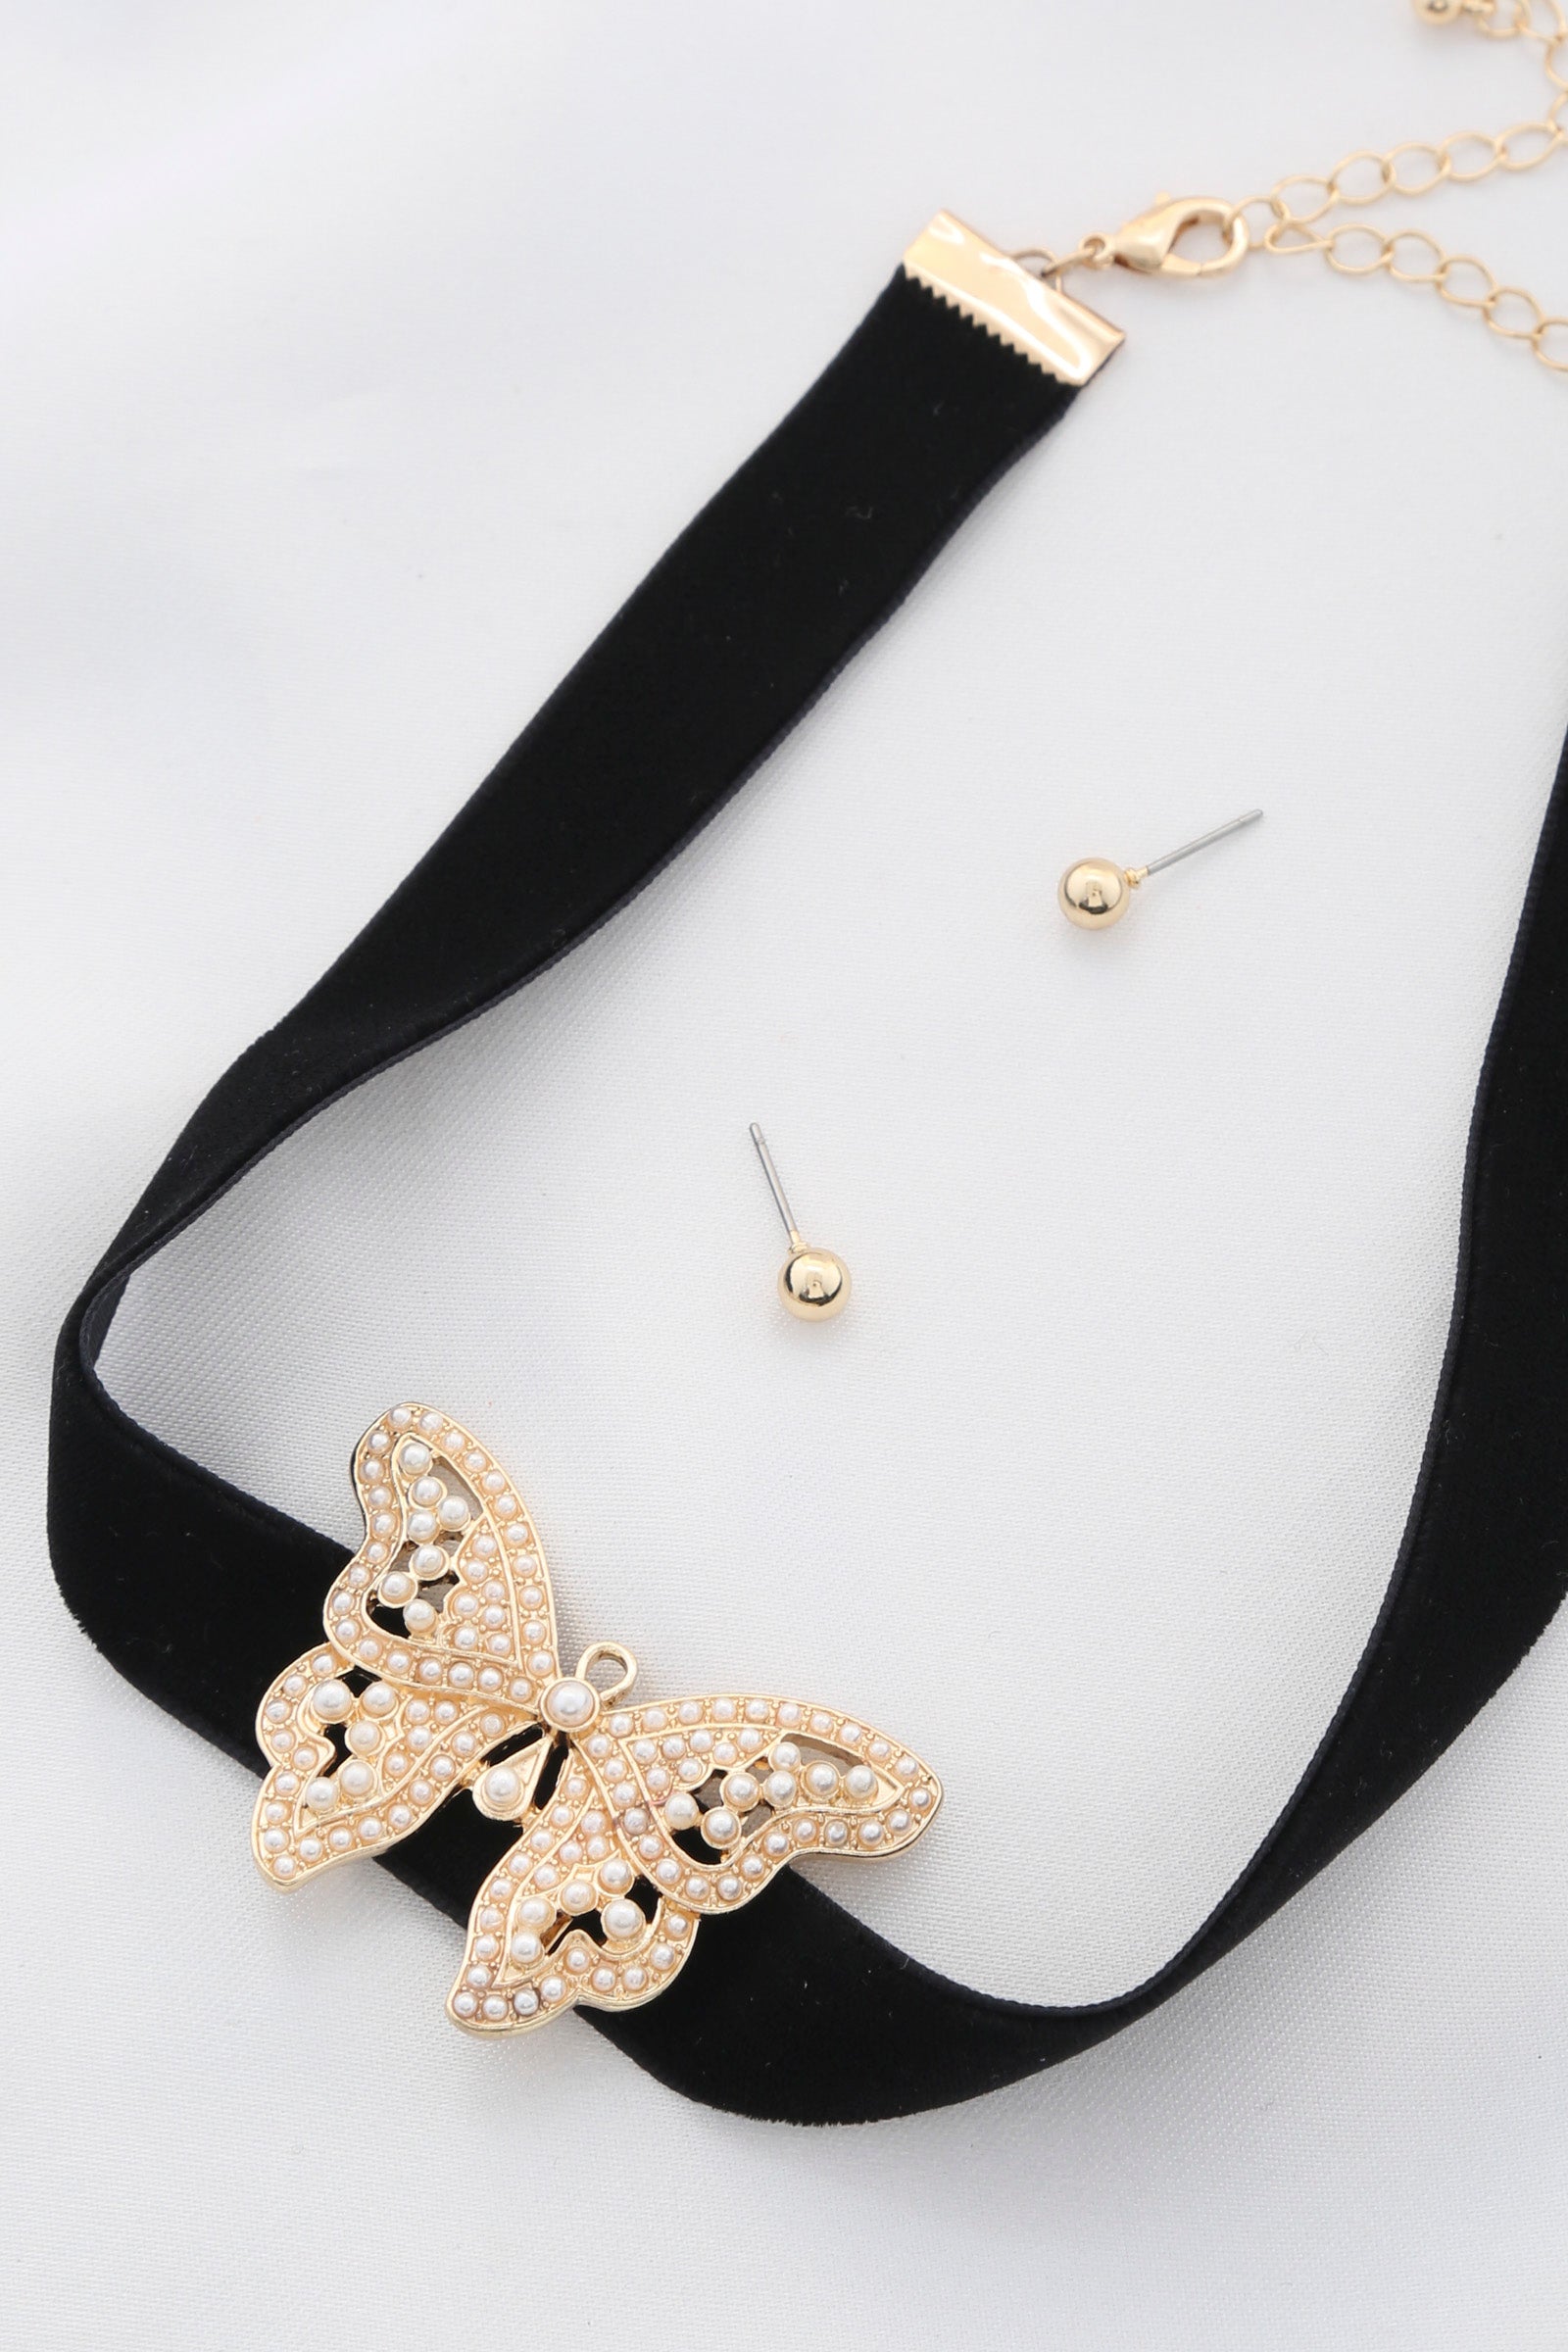 - Butterfly Pendant Choker Necklace - womens choker at TFC&H Co.